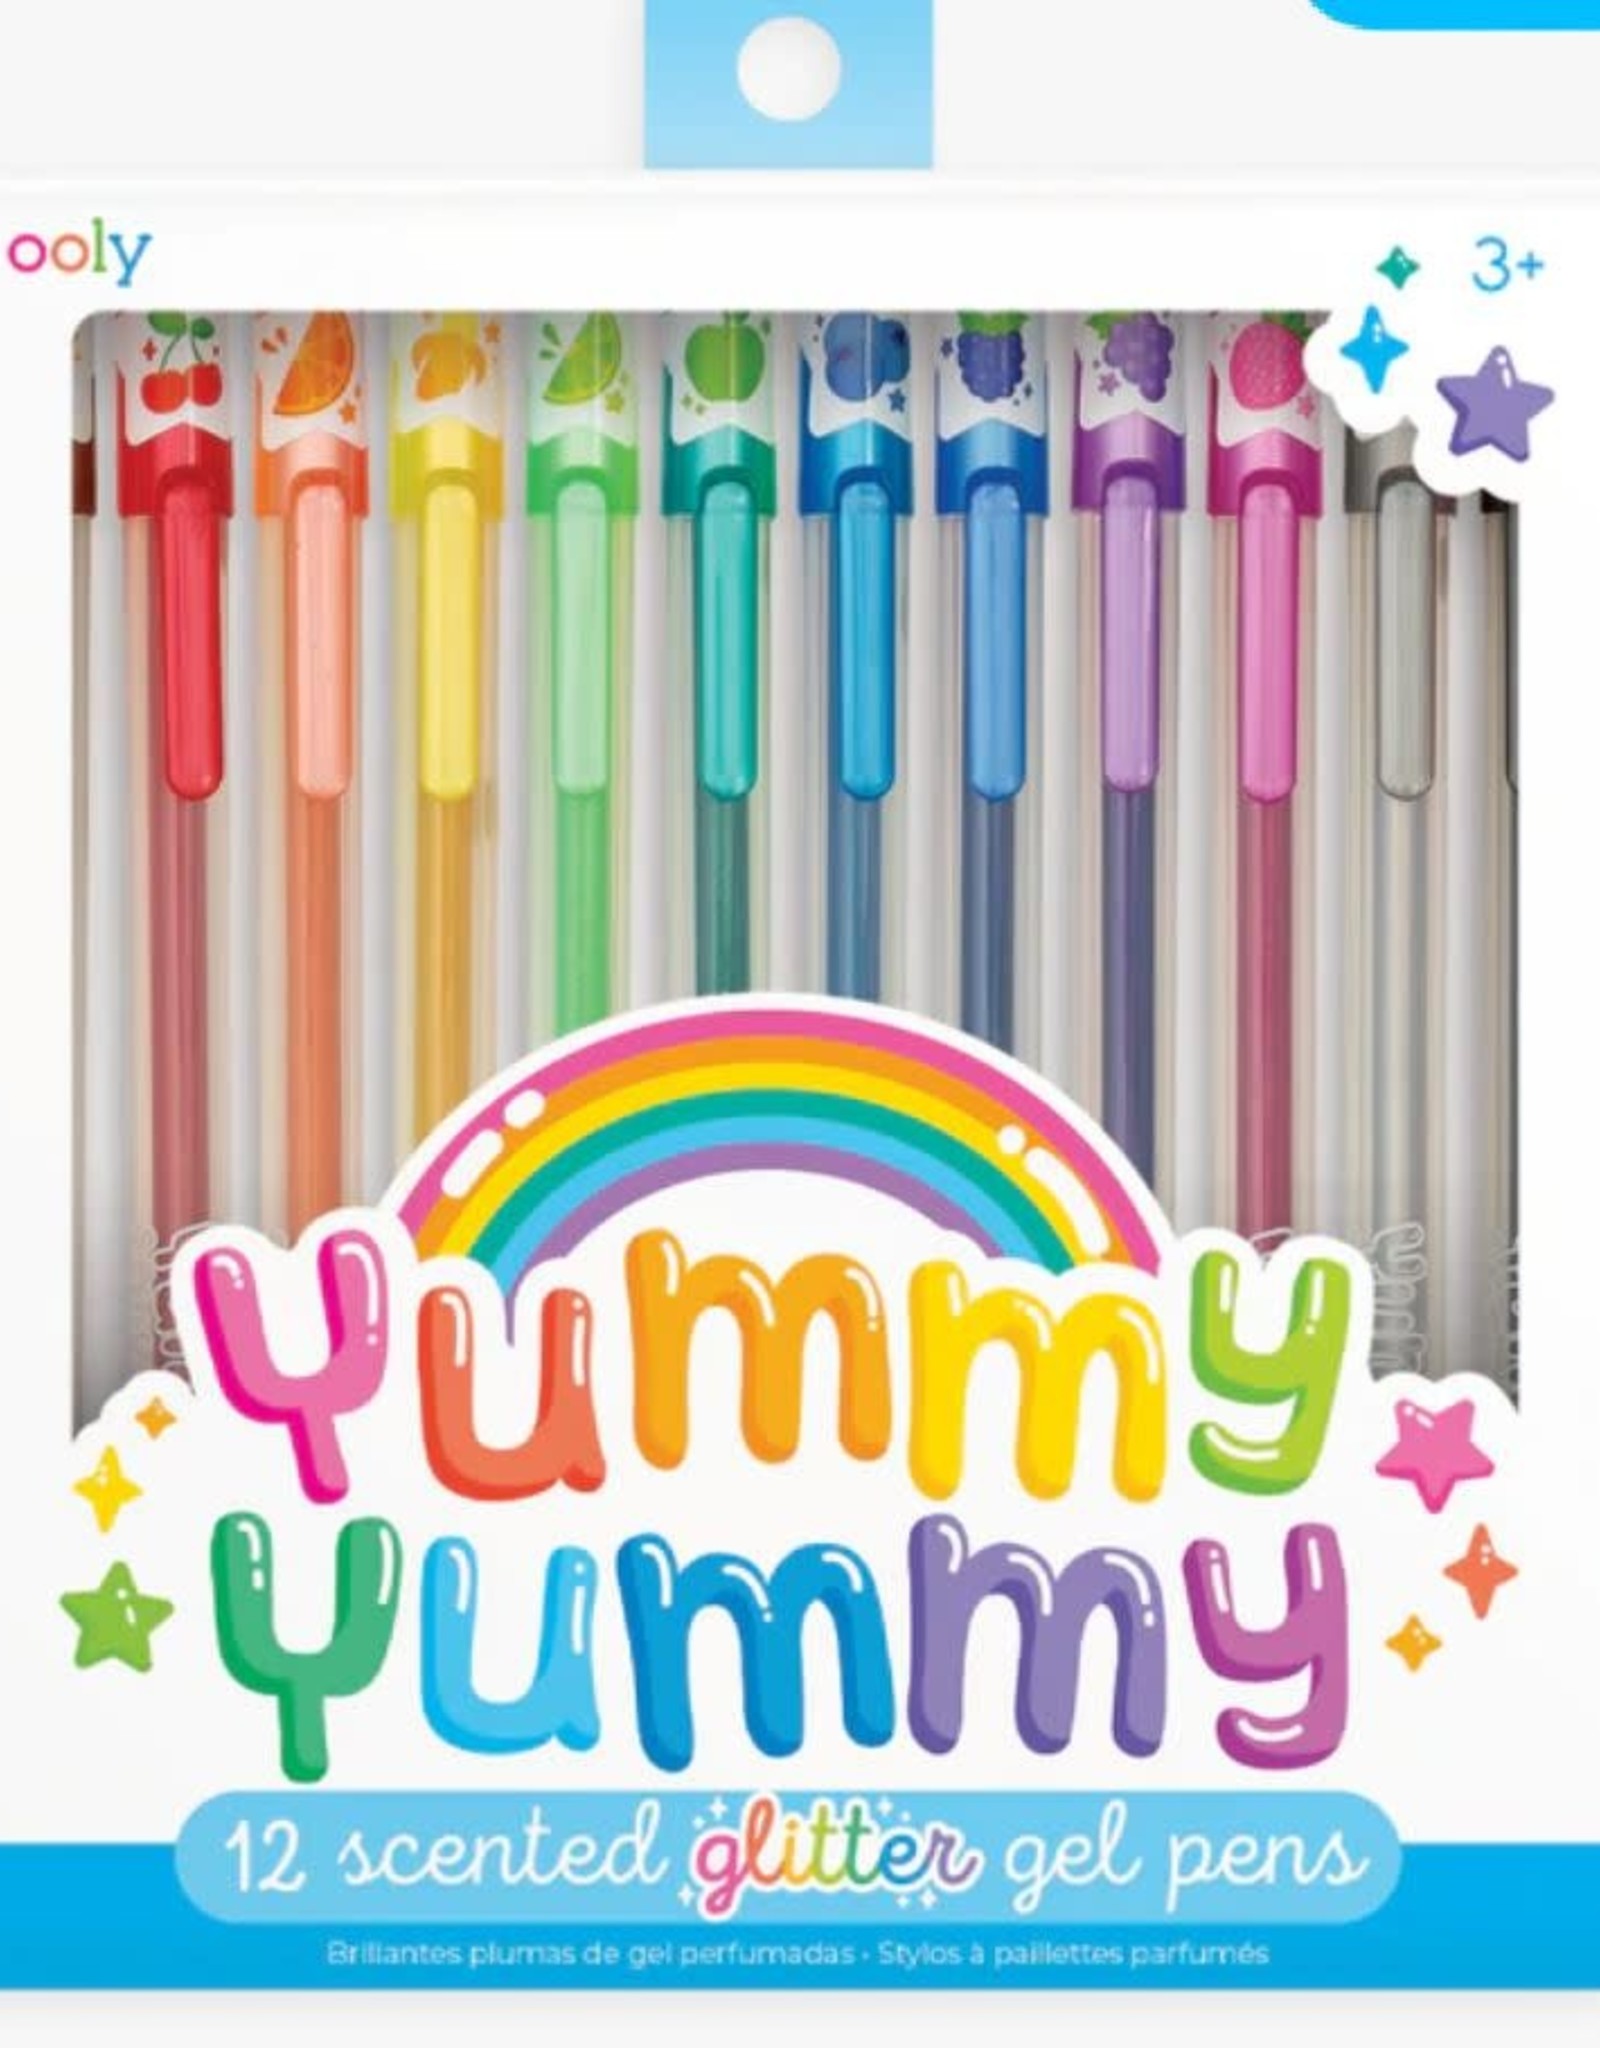 Yummy Yummy Scented Glitter Pens